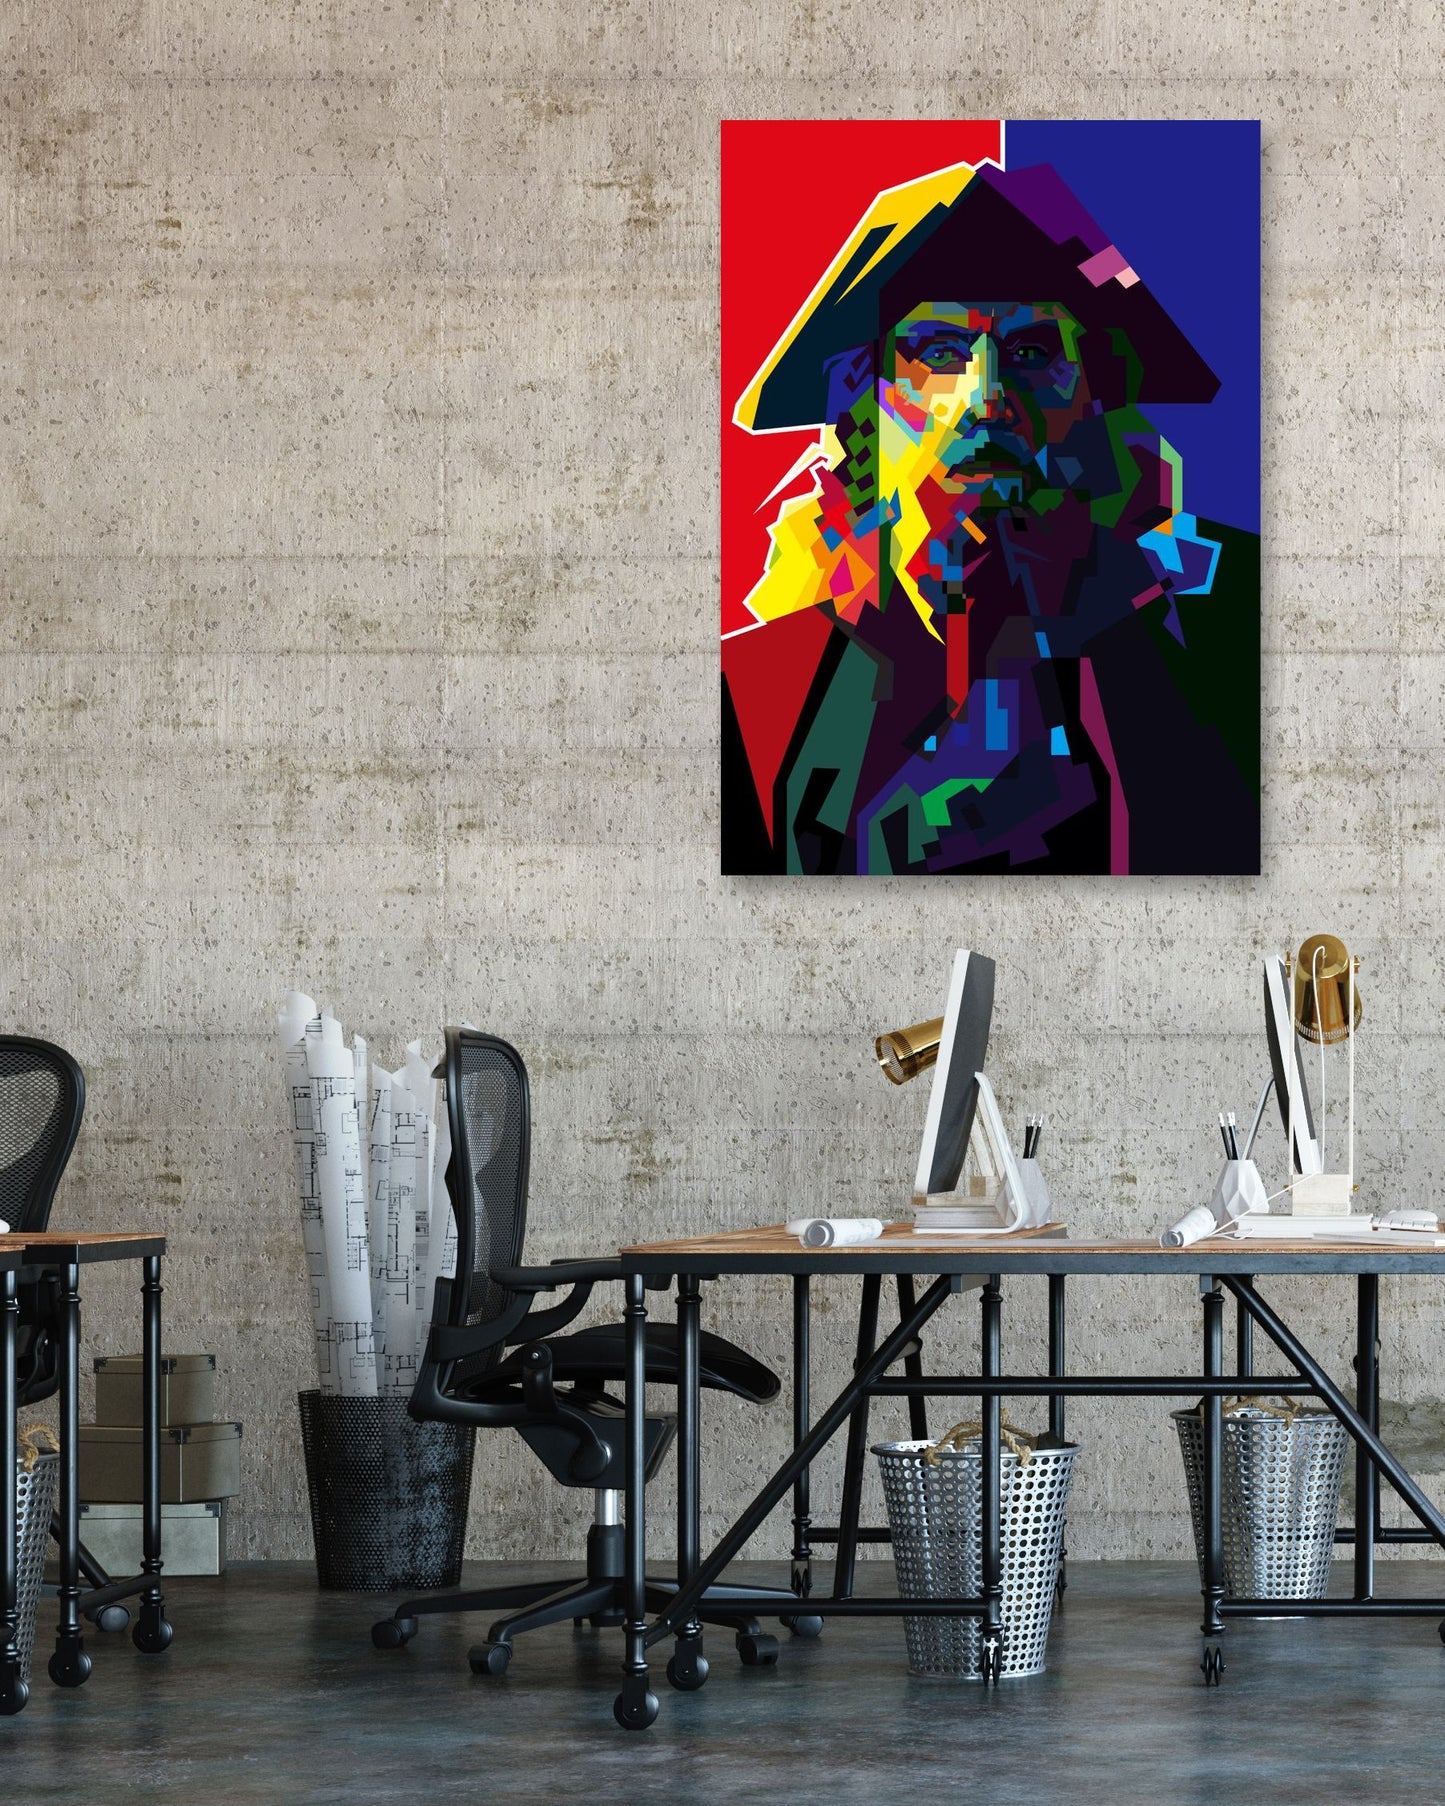 Al Pacino Blackbeard Character Pop Art WPAP - @Artkreator